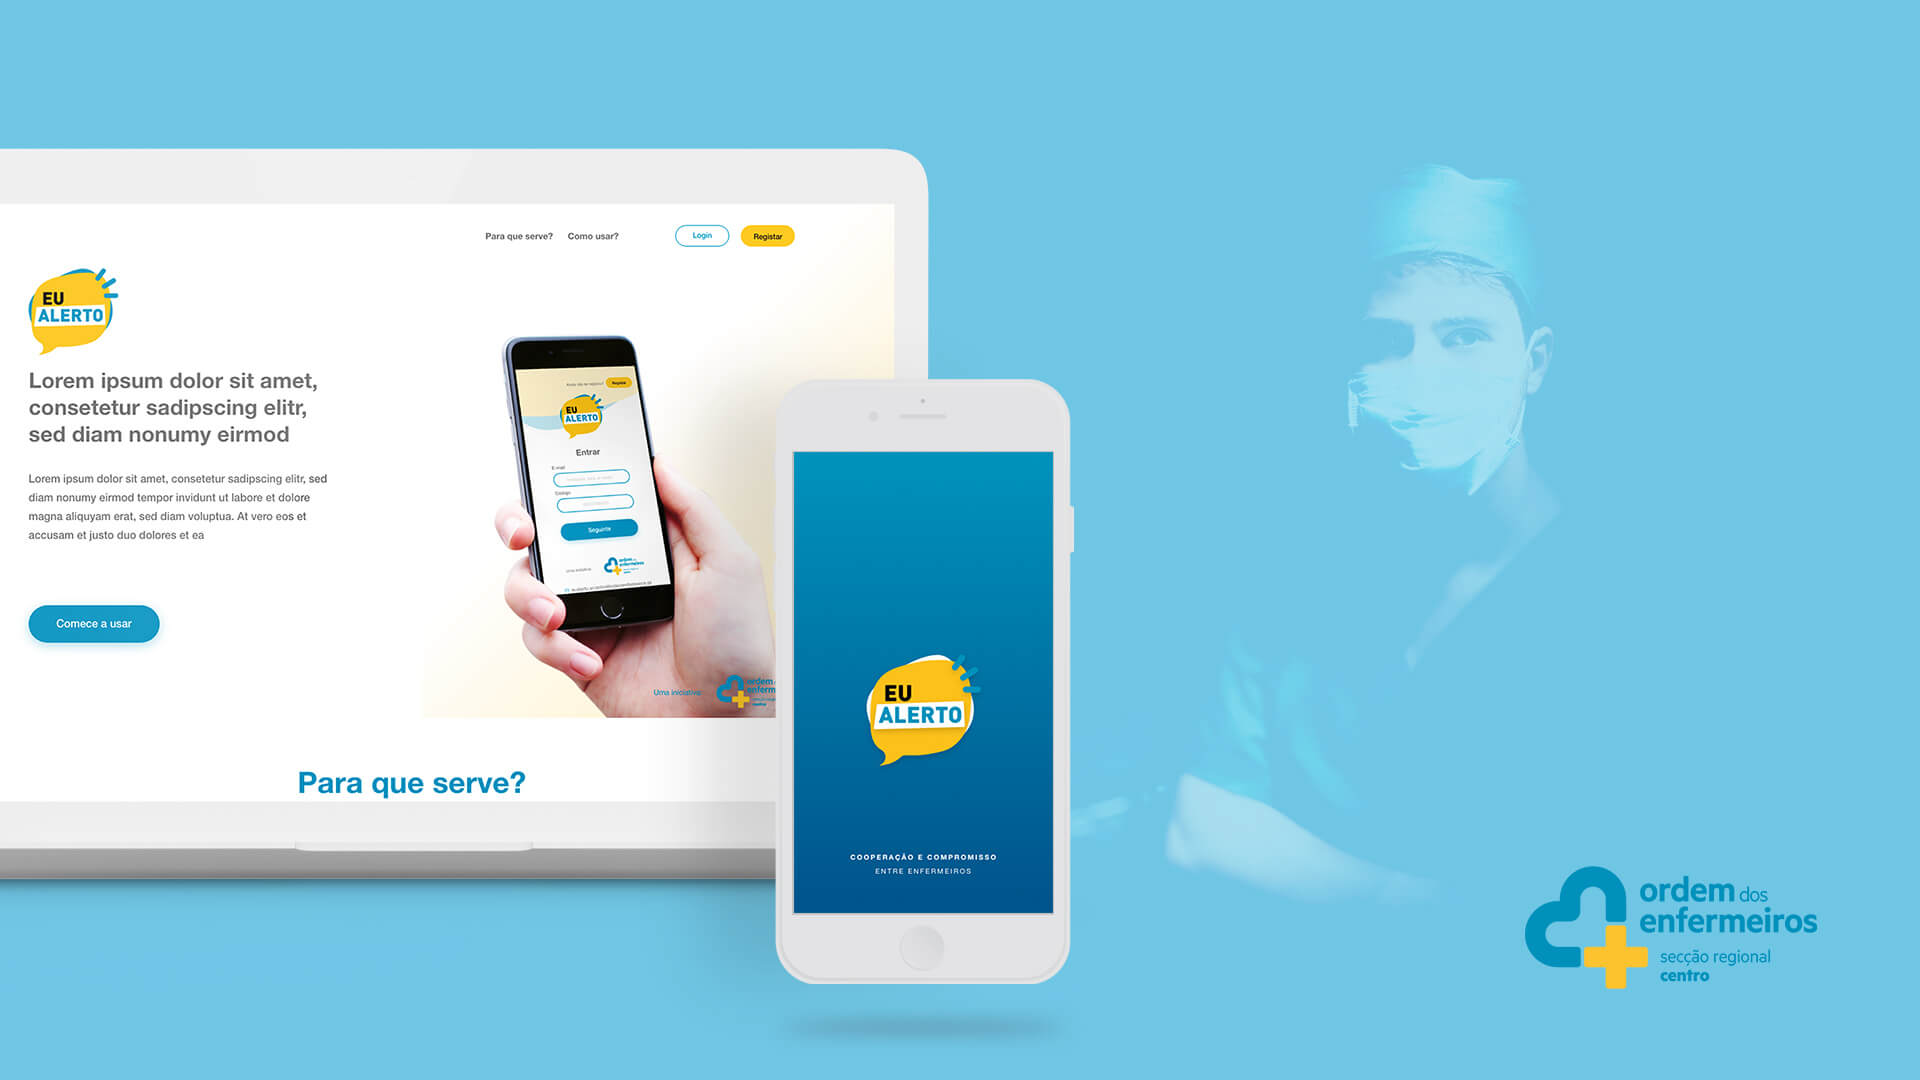 oad web mockup of eu alerto app for ordem dos enfermeiros